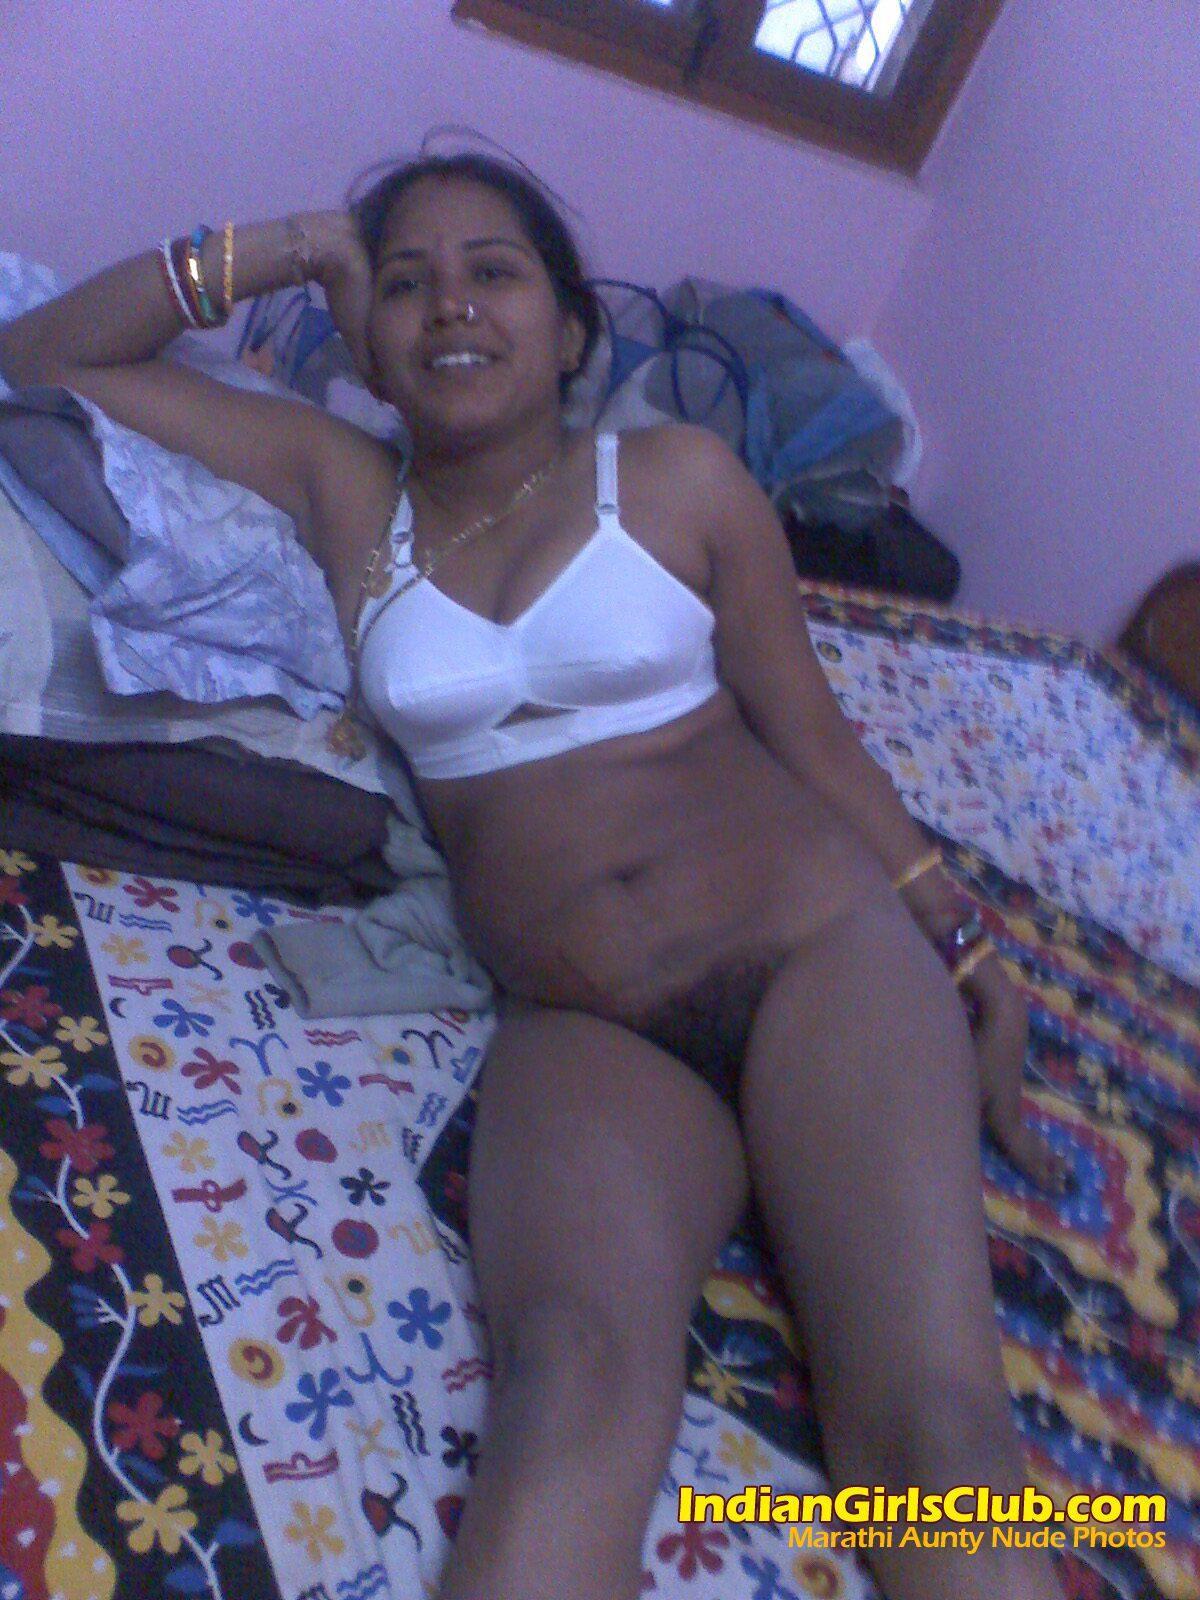 Desi bhabhi sexy bra sex story in marathi New porn site image picture image